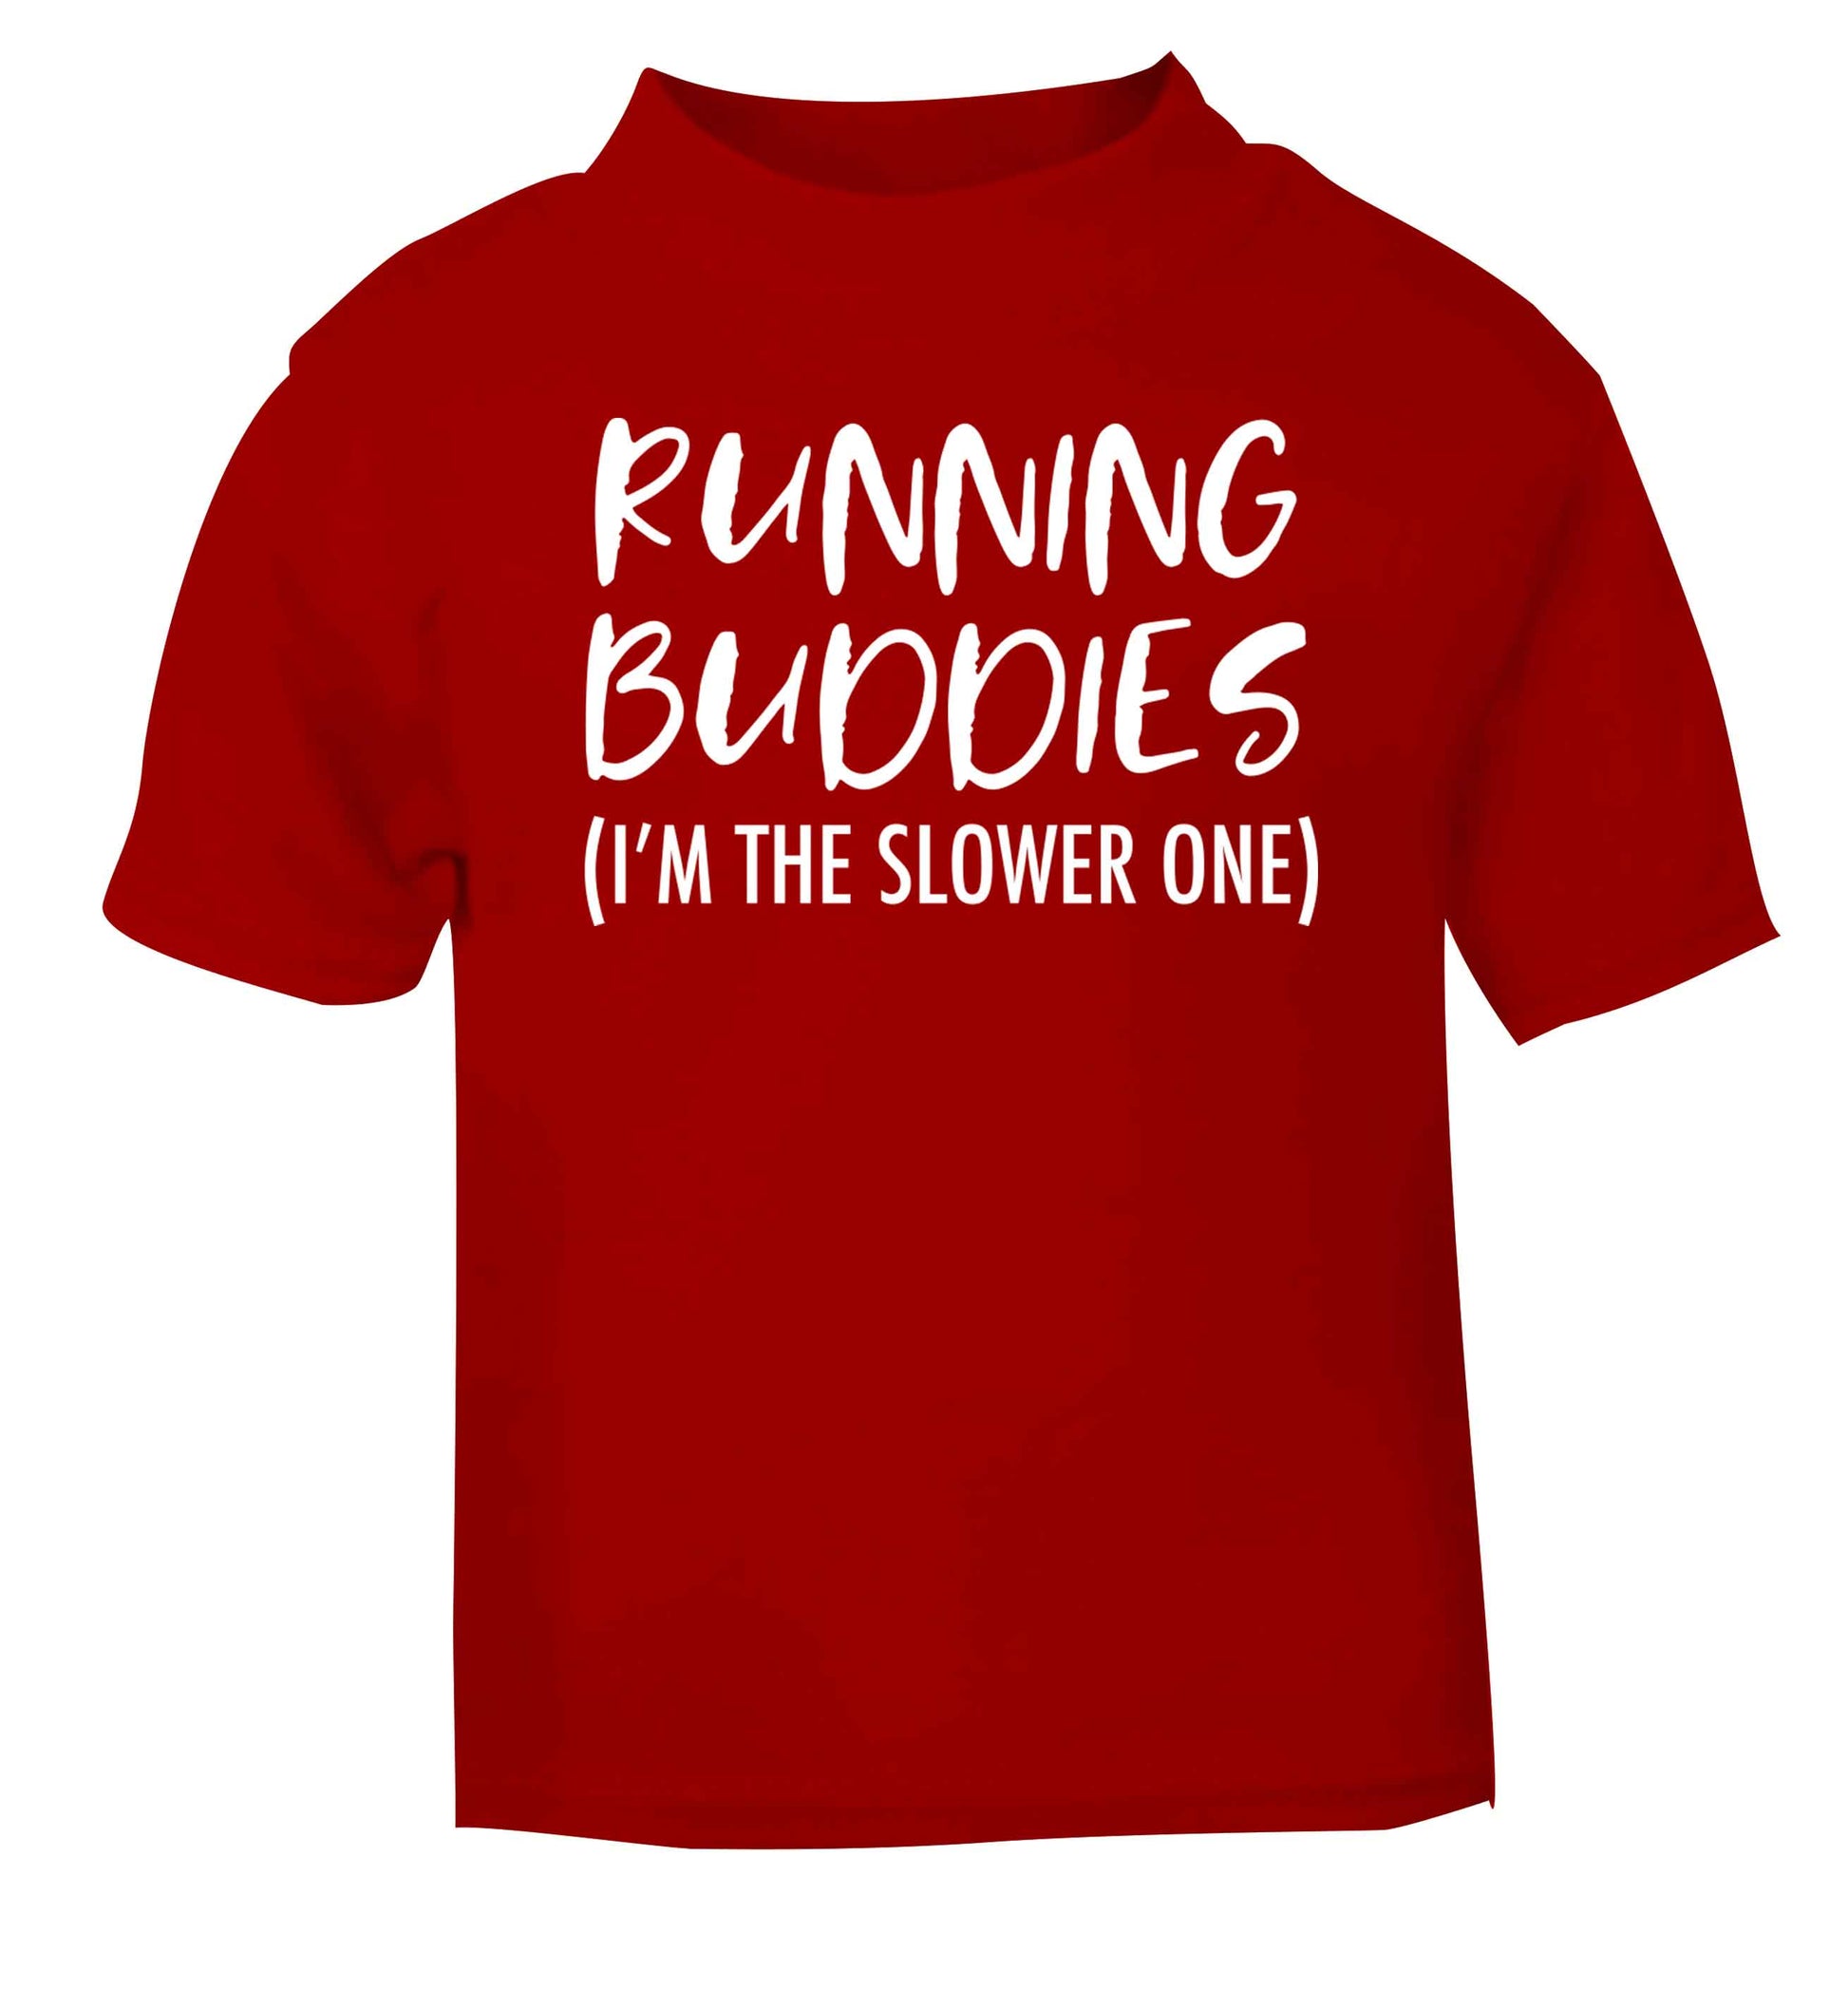 Running buddies (I'm the slower one) red baby toddler Tshirt 2 Years